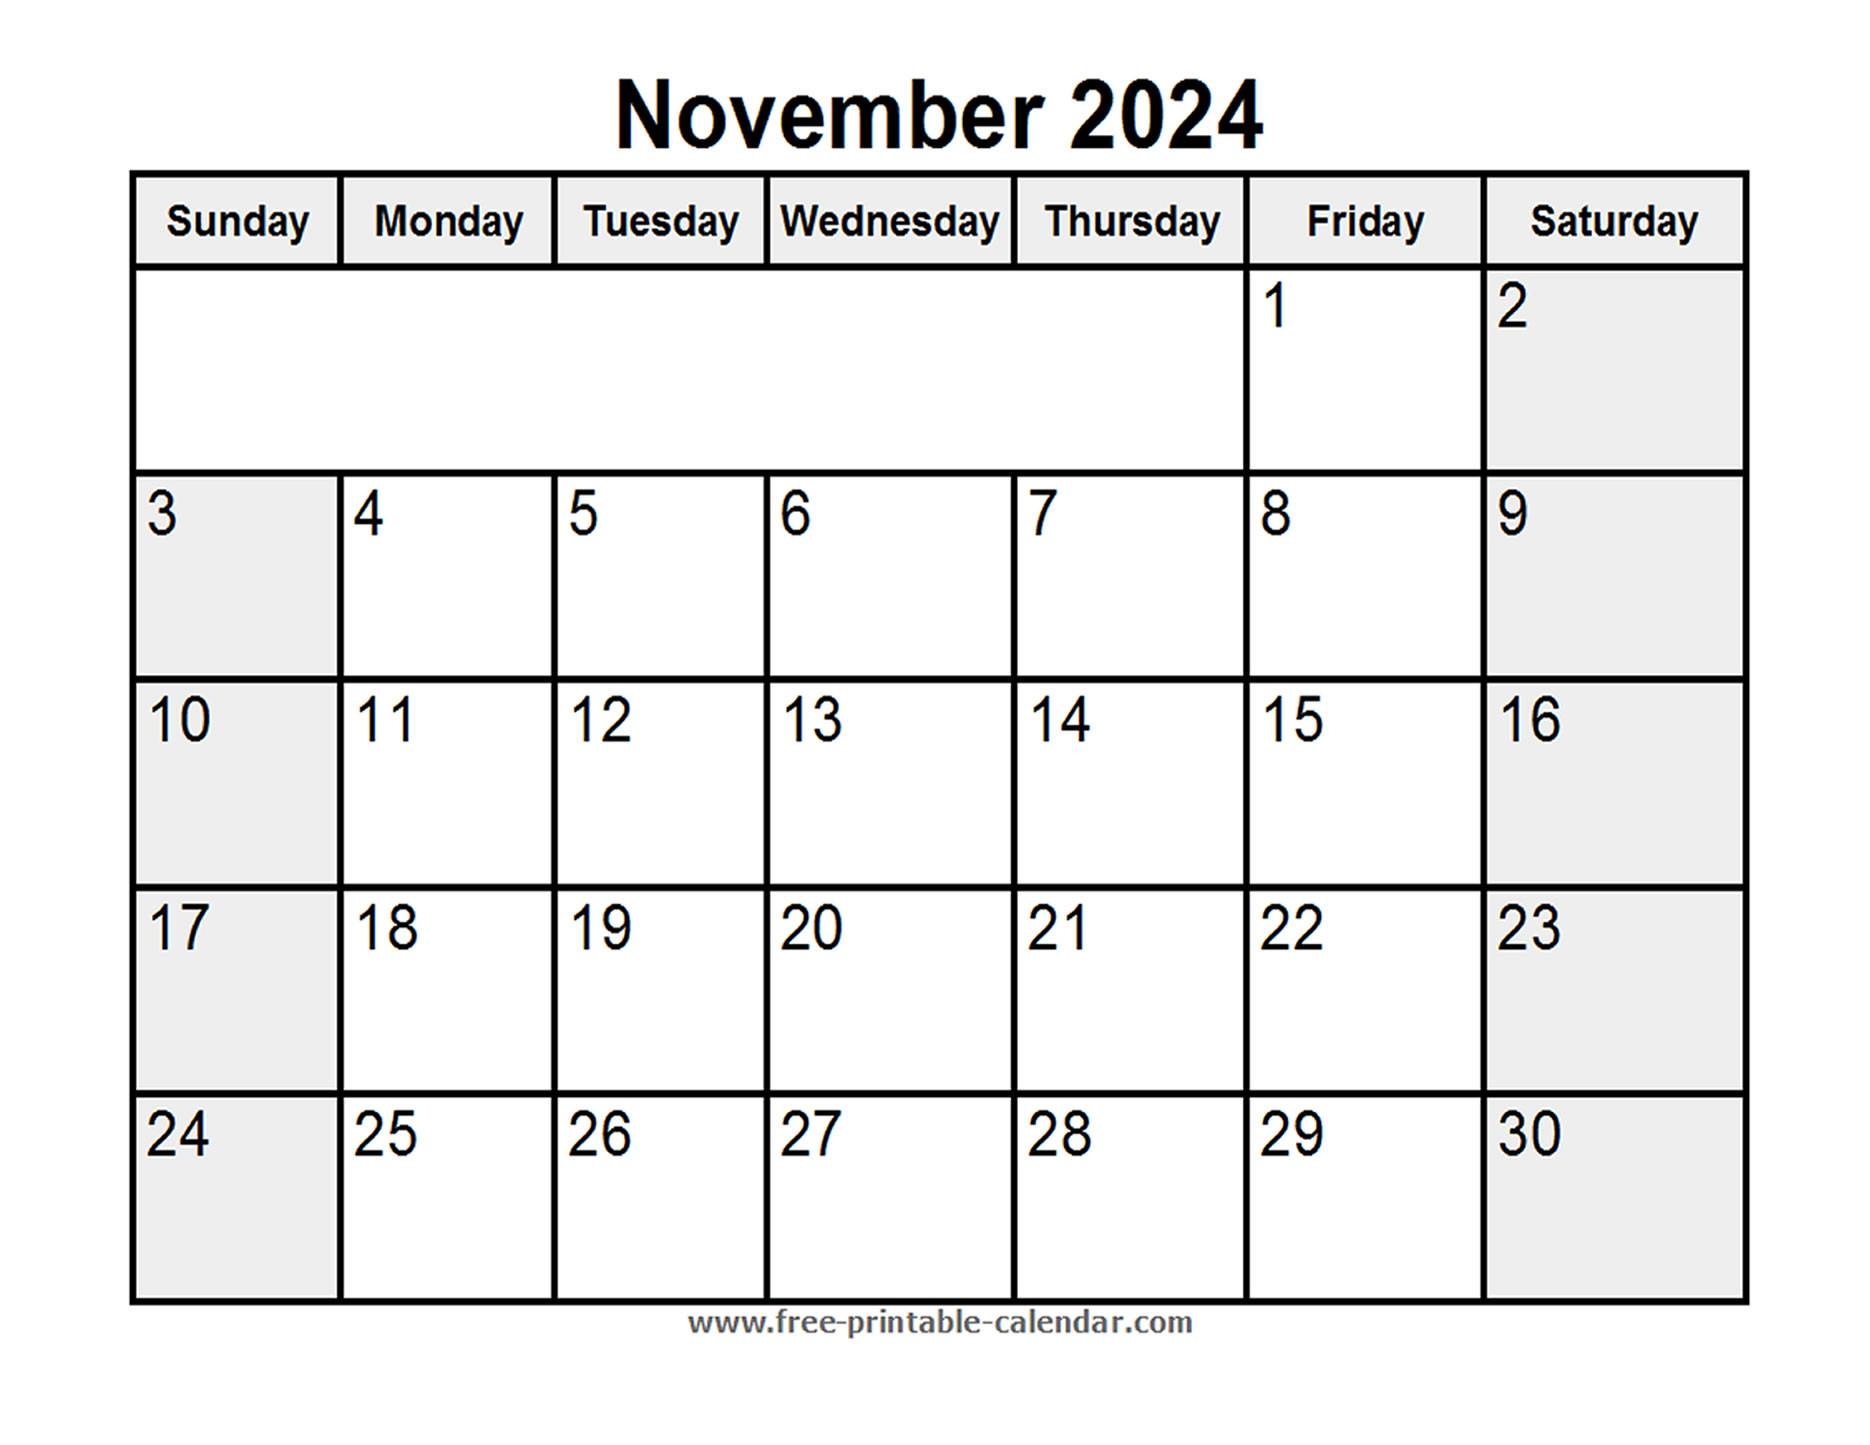 Printable November 2024 Calendar - Free-Printable-Calendar within Free Printable Blank Calendar 2024 November